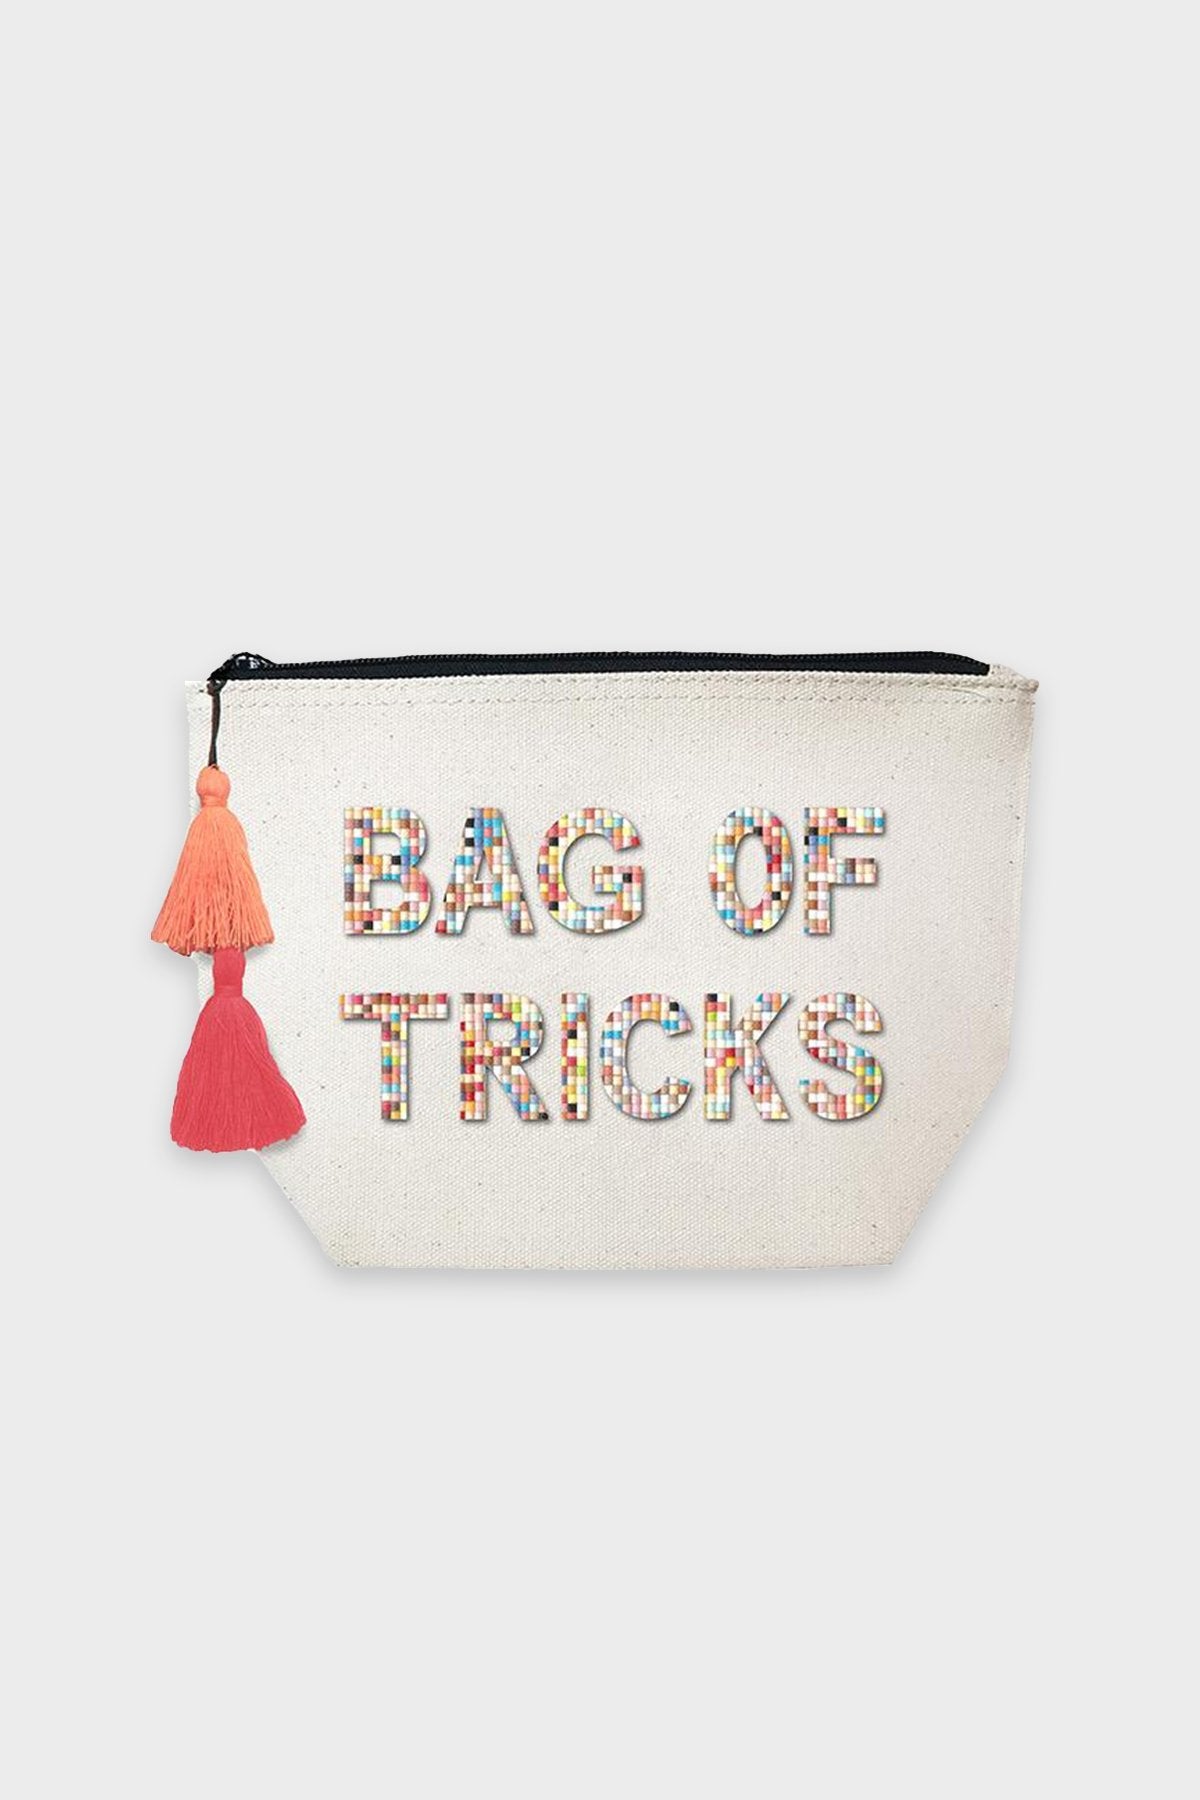 Bag of Tricks Cosmetic Bag in Confetti - shop-olivia.com